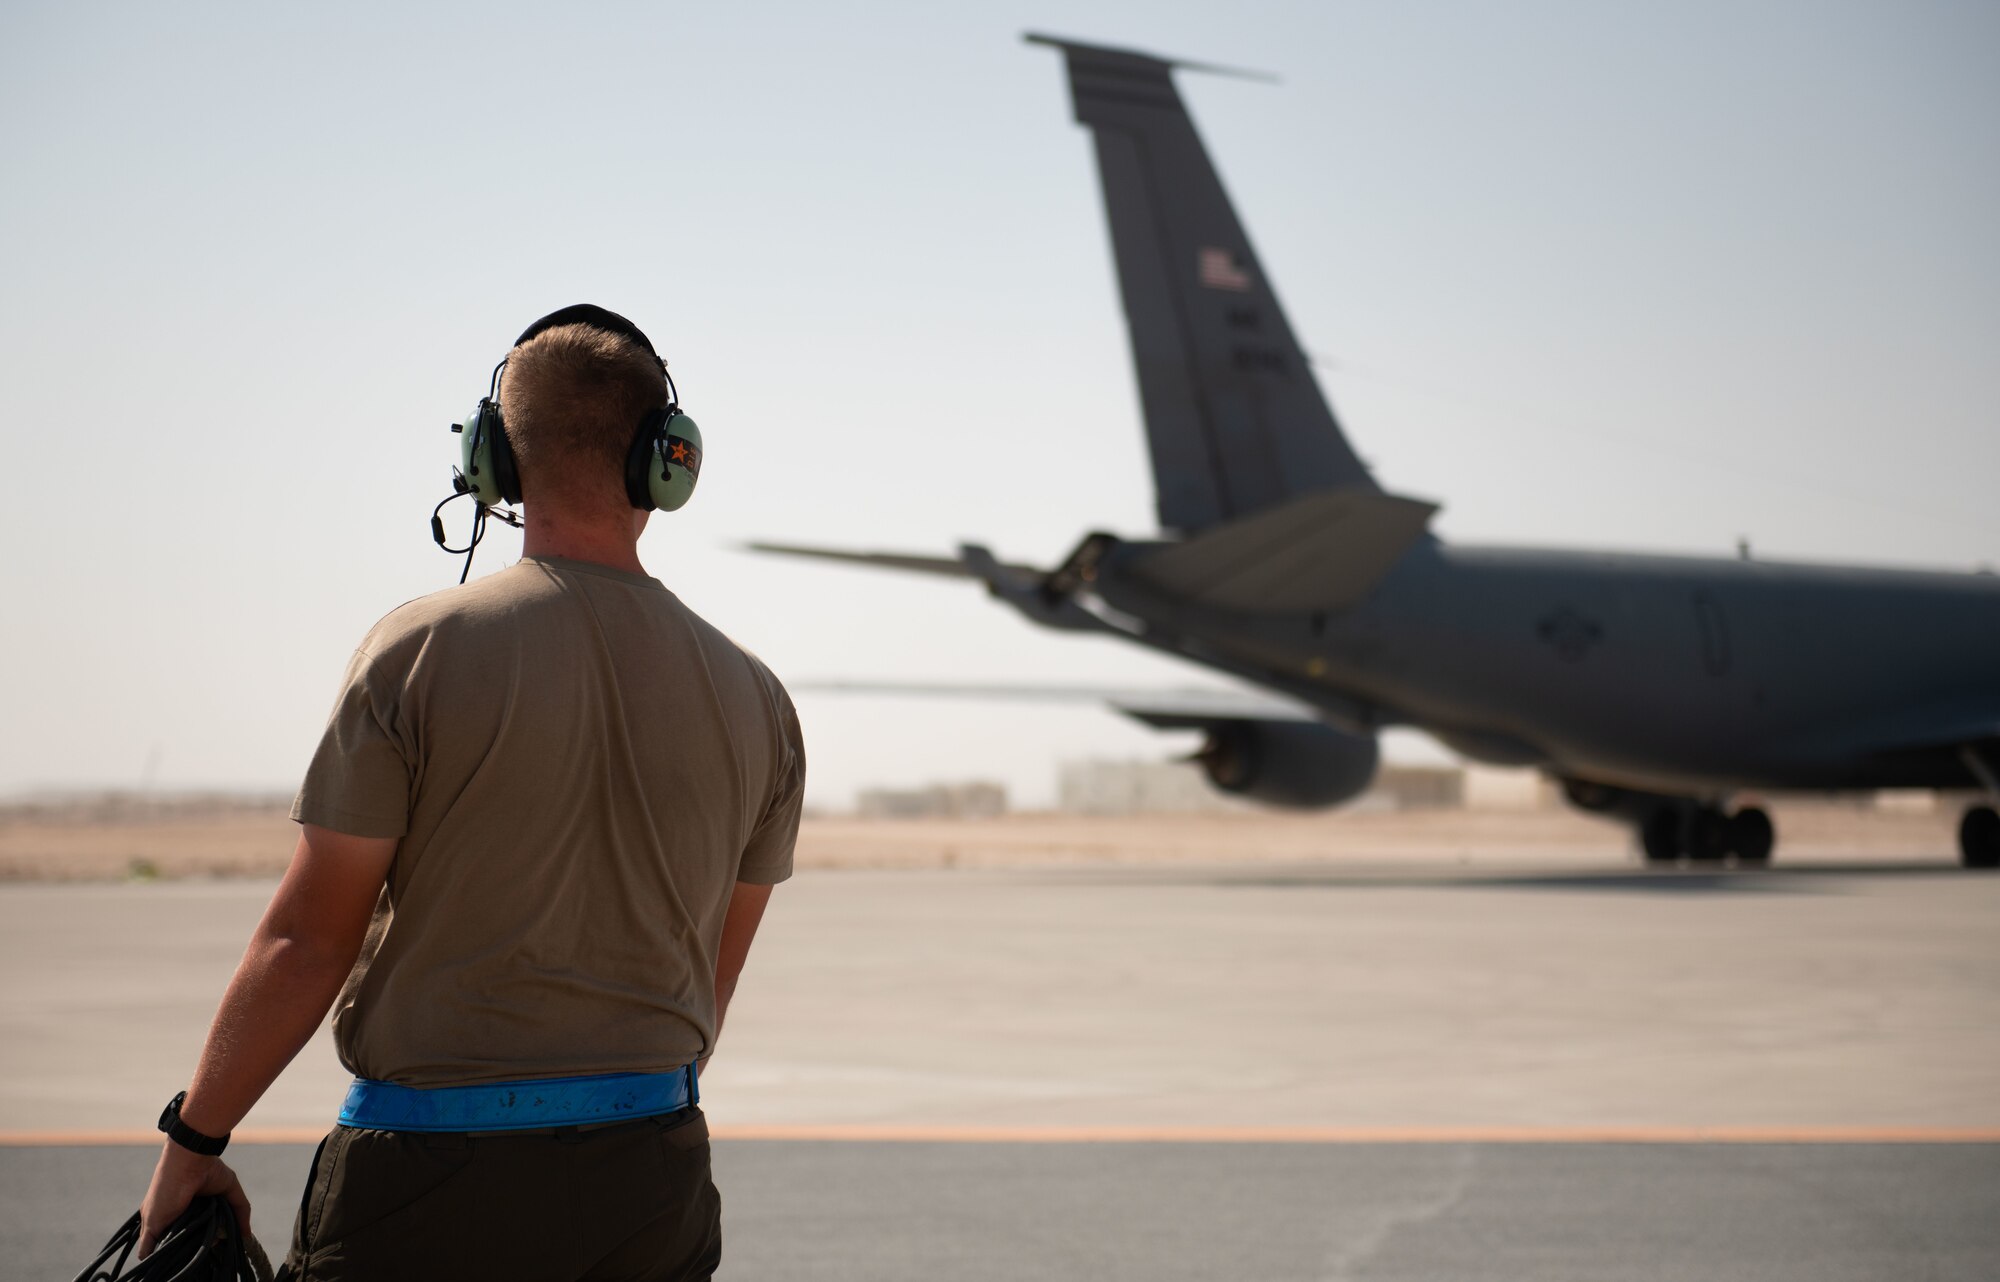 U.S. Air Force Airman watches over an aircraft.